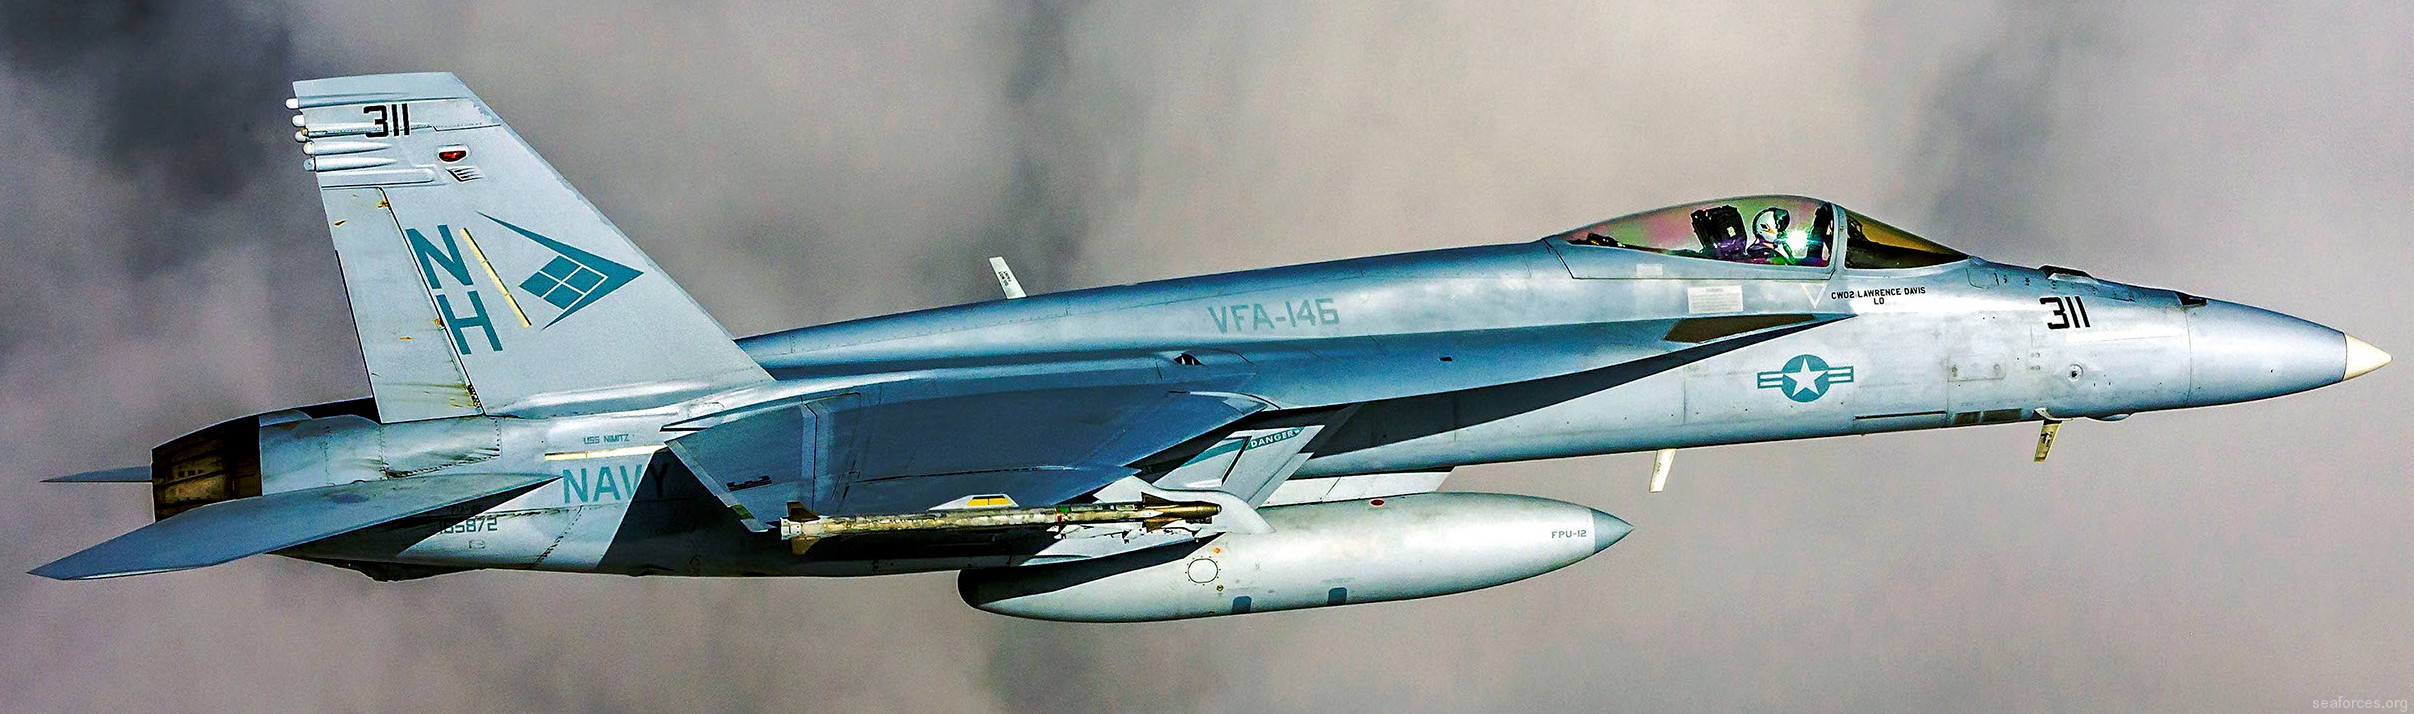 vfa-146 blue diamonds strike fighter squadron f/a-18e super hornet carrier air wing cvw-11 uss nimitz cvn-68 136